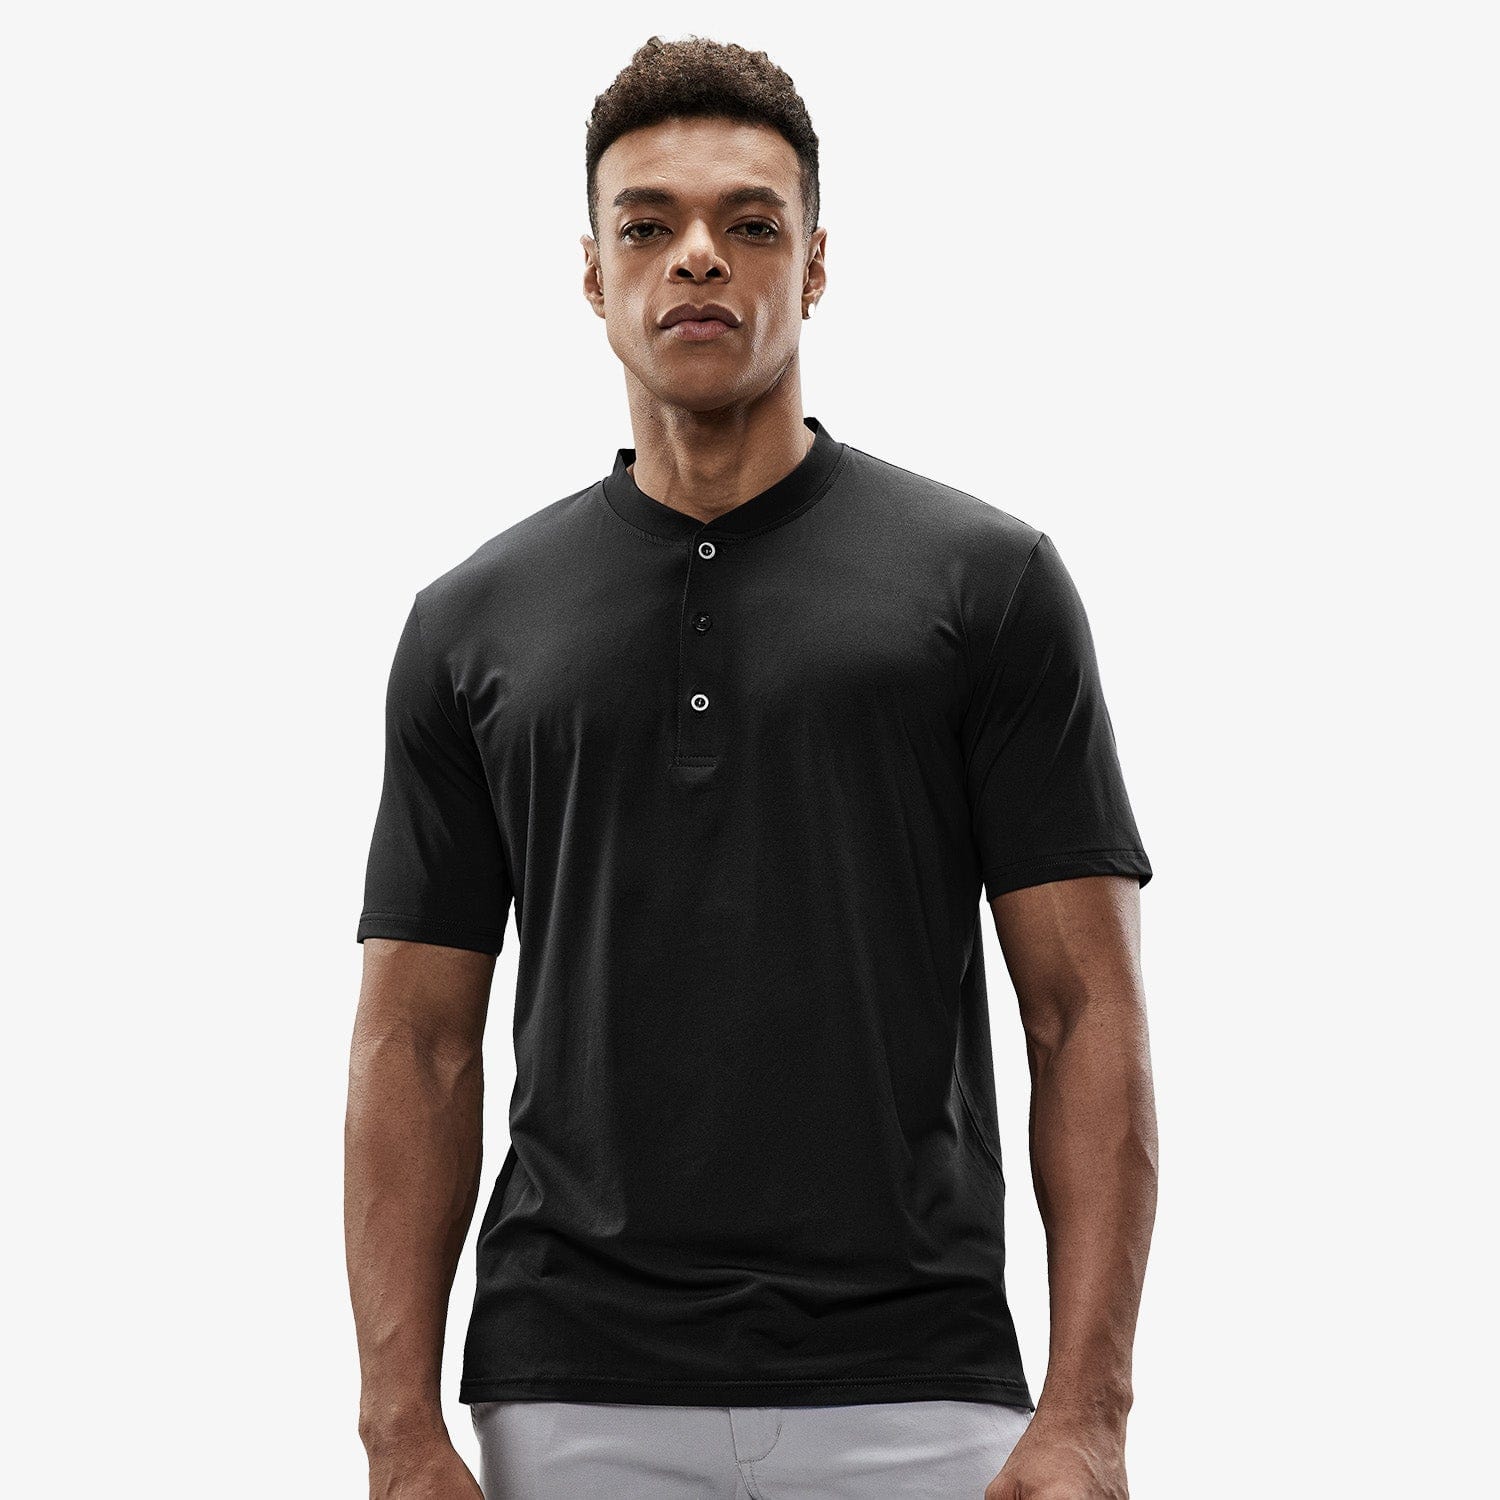 Men's Henley T-Shirt Quick Dry Collarless Casual Tee Shirts - Black / 2XL